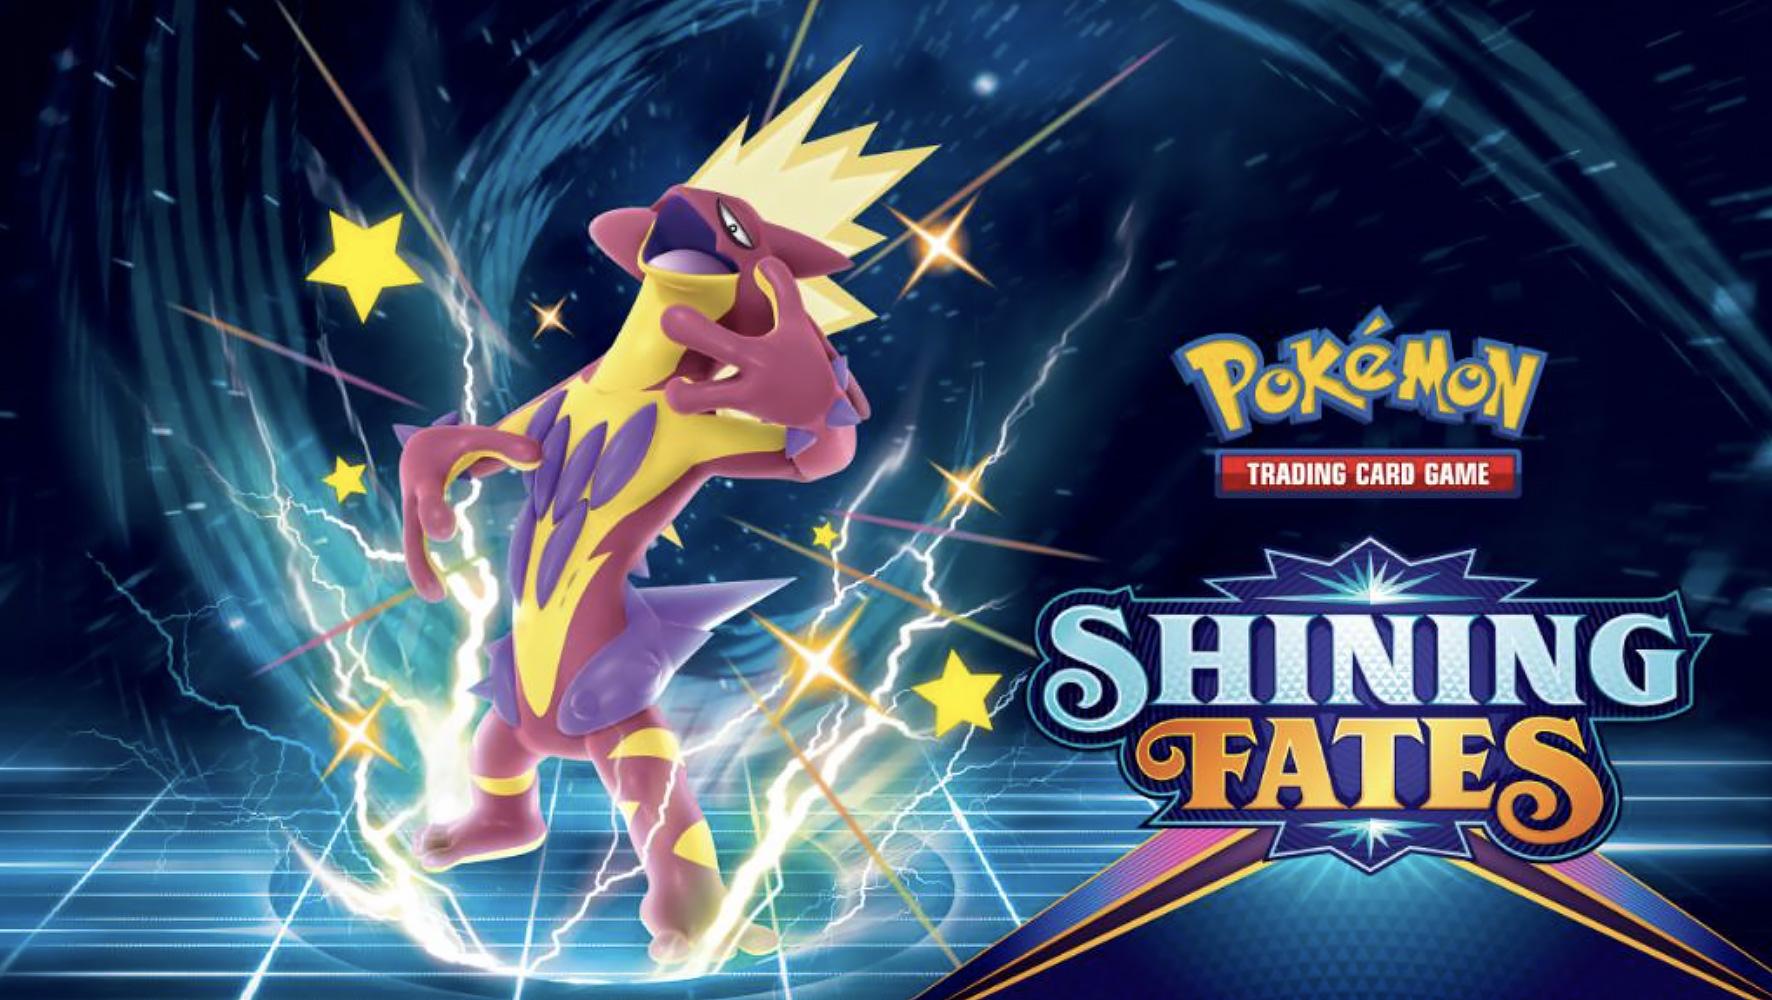 Pokemon TCG Shining Fates Toxtricity promotional wallpaper.